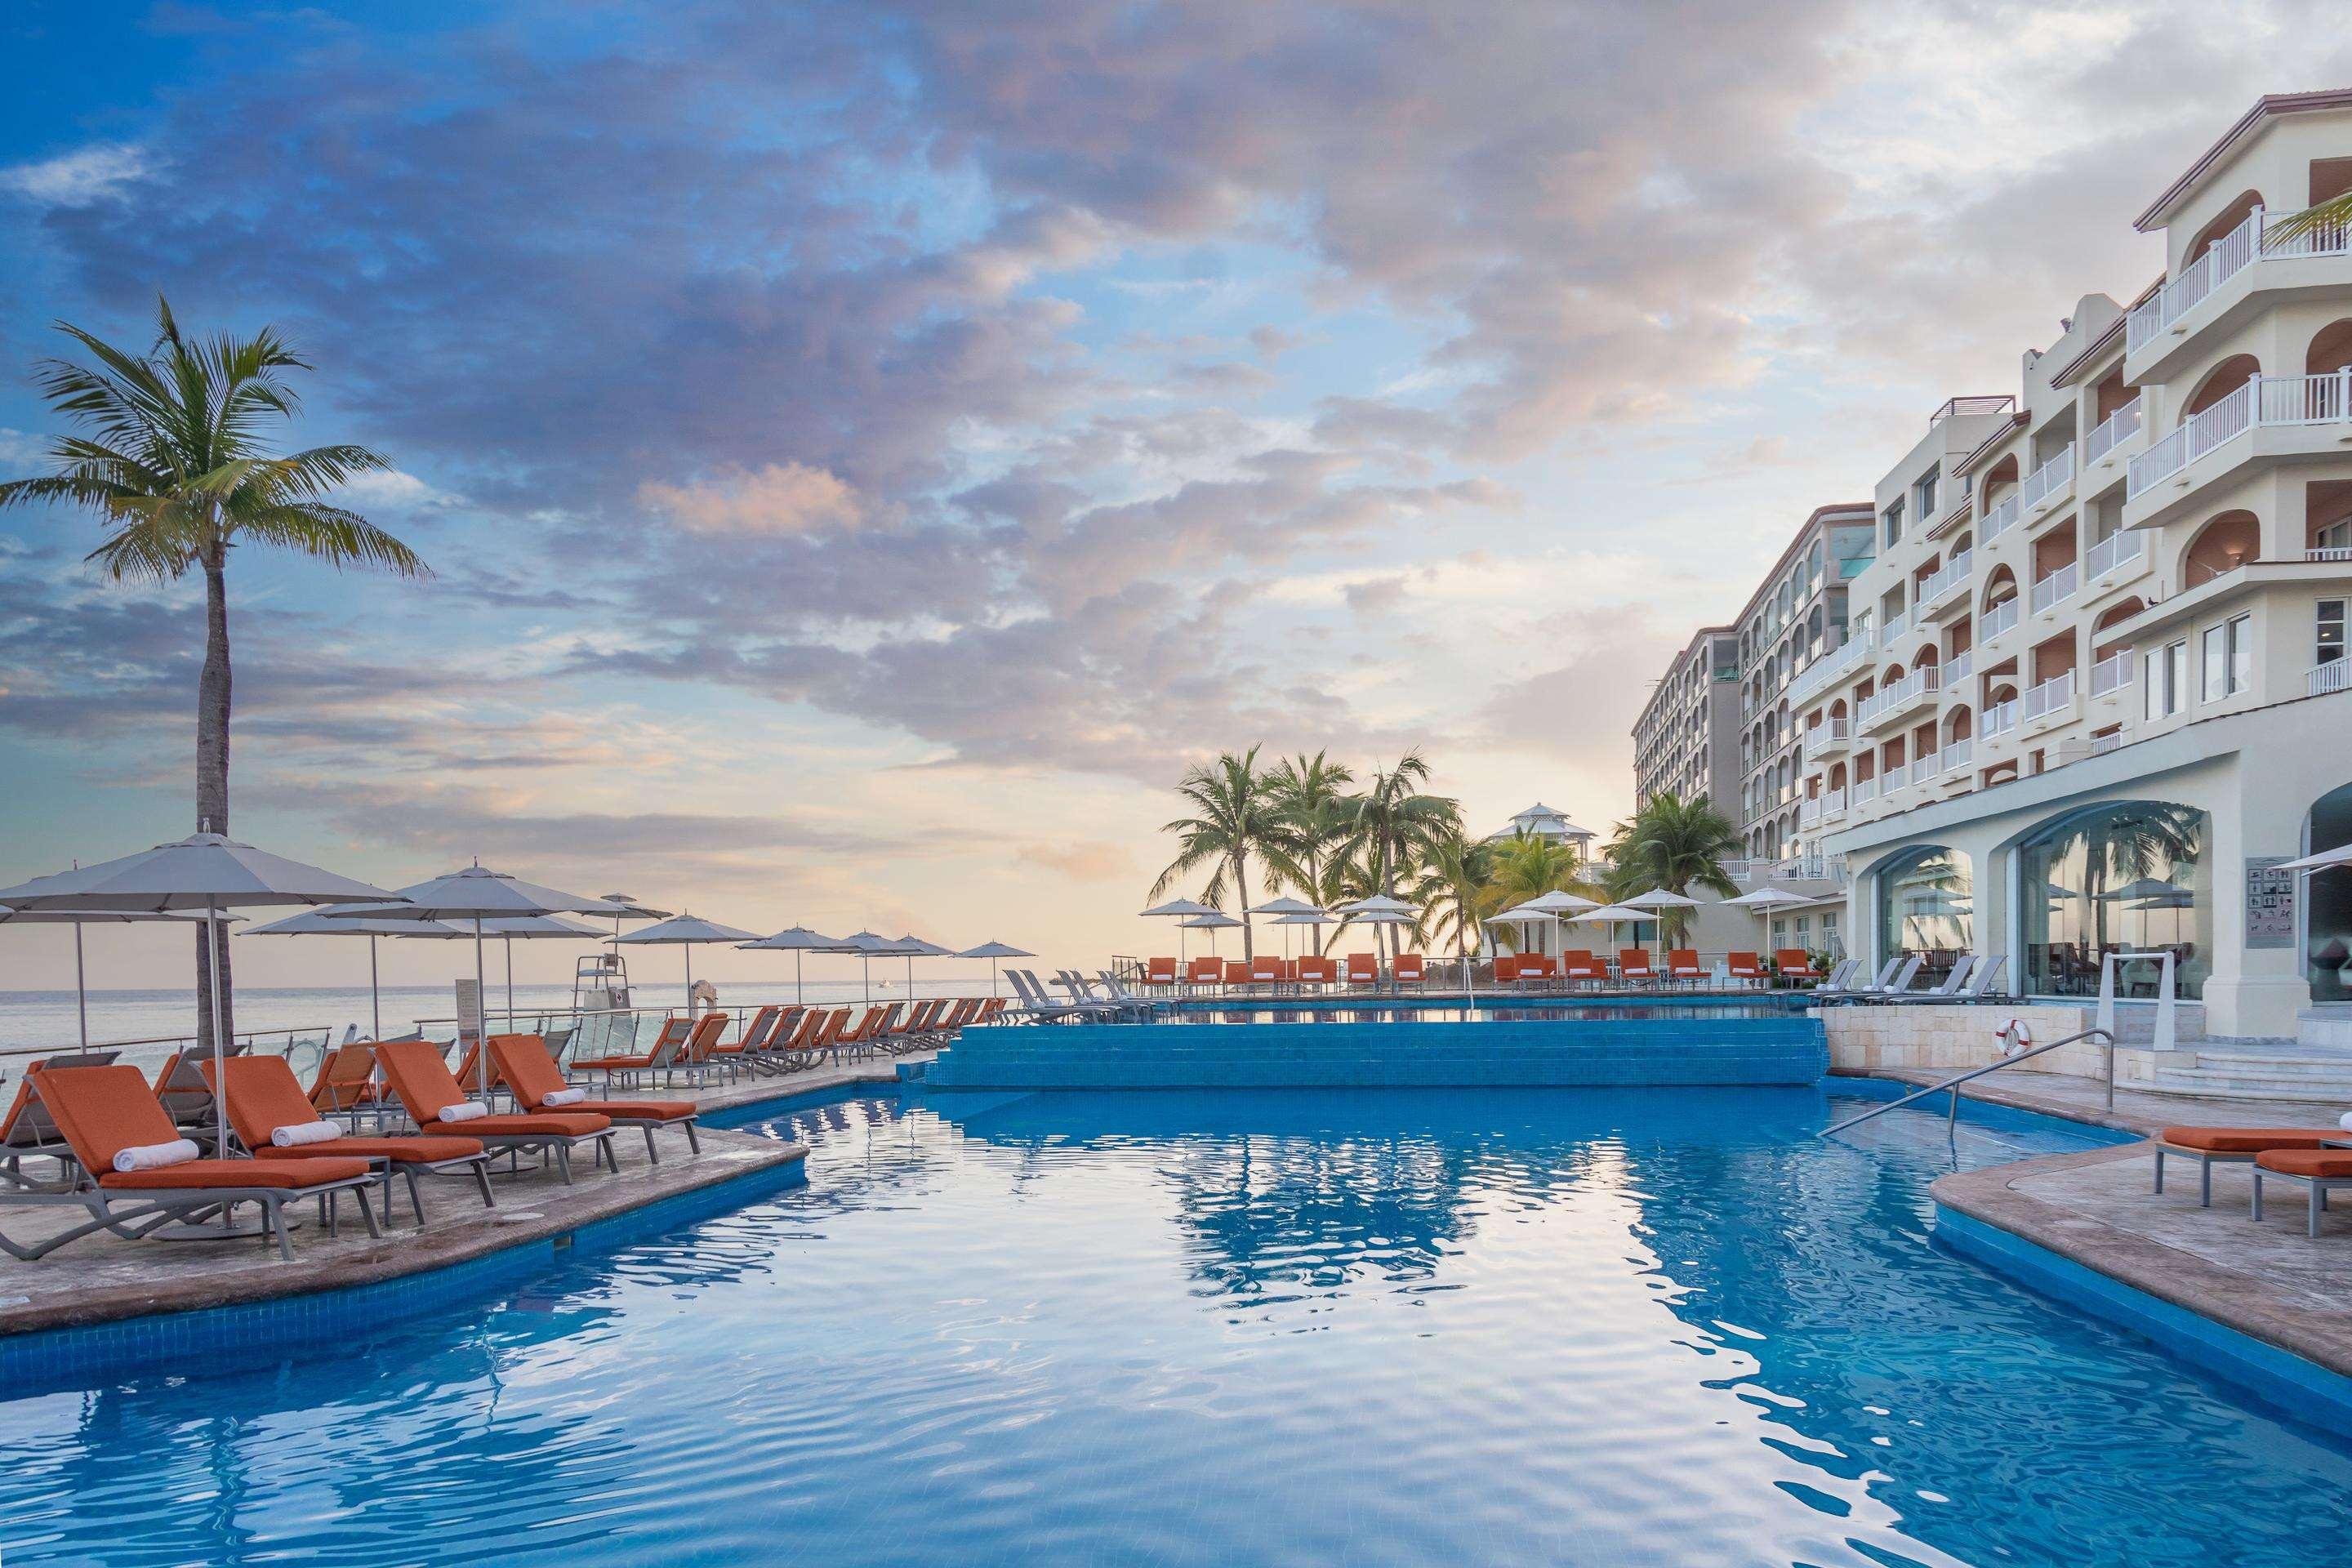 16 Best Hotels in Cozumel. Hotels from $49/night - KAYAK